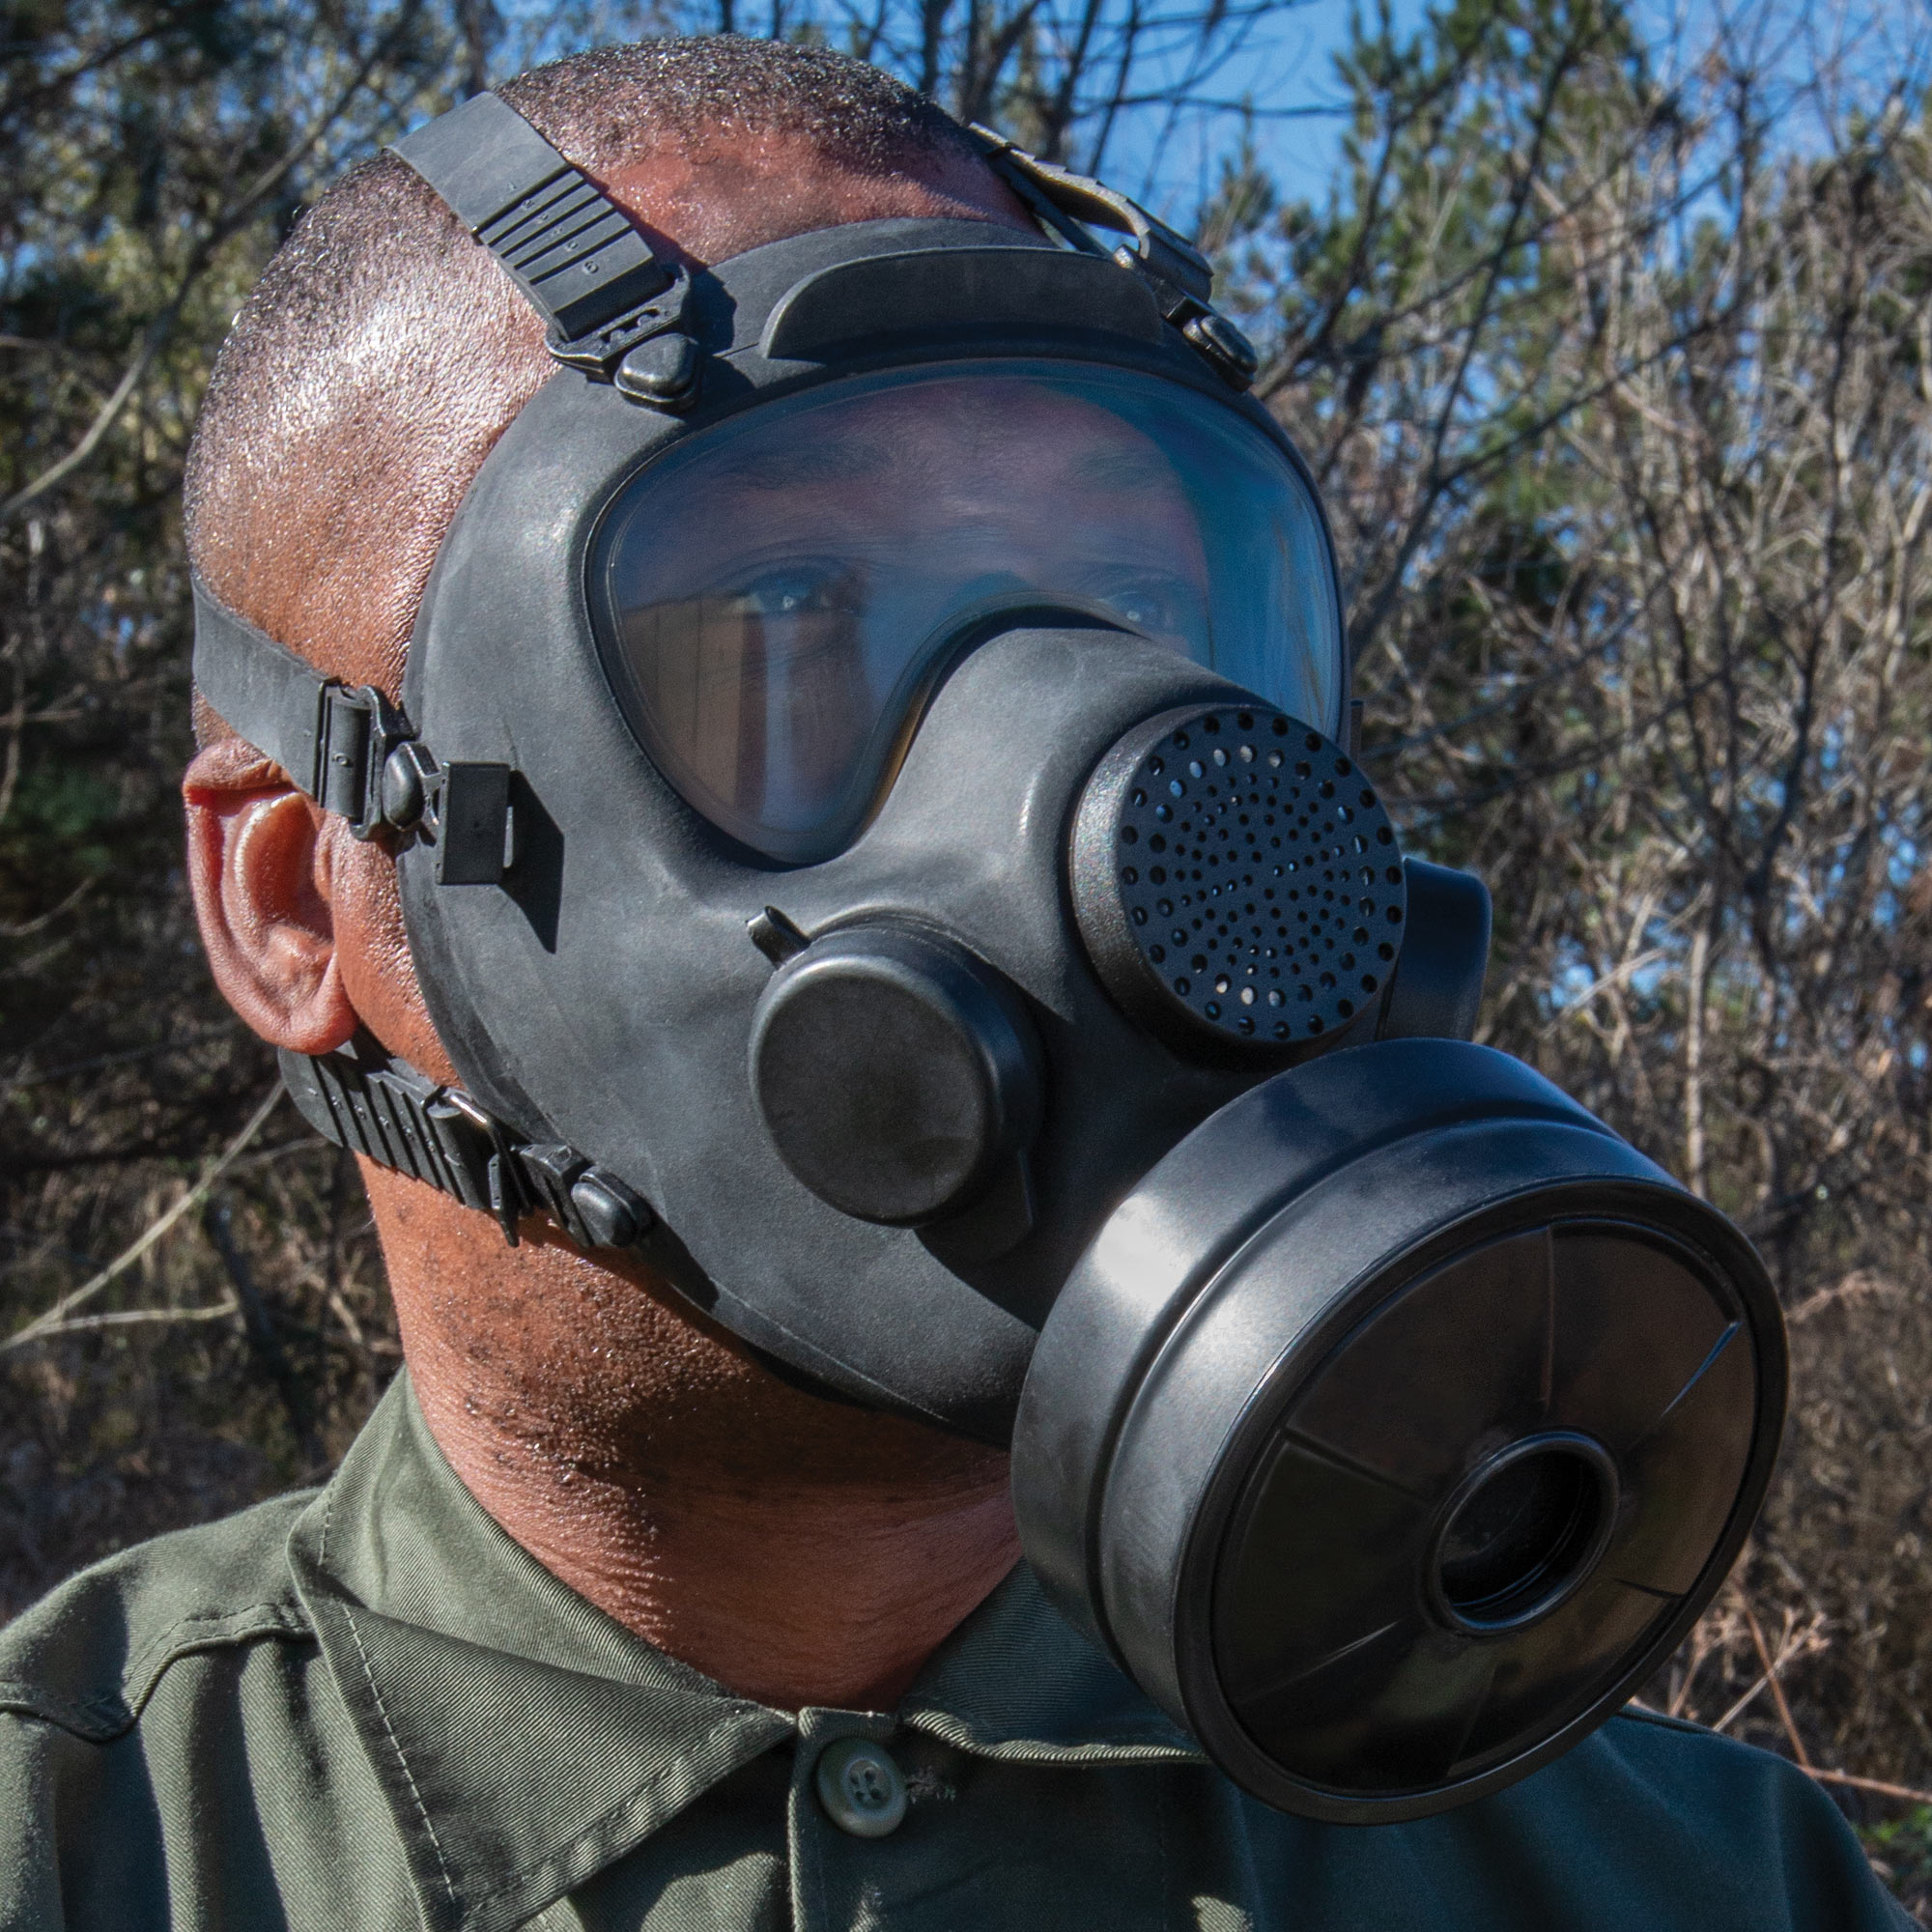 swedish military nbc gas mask f2